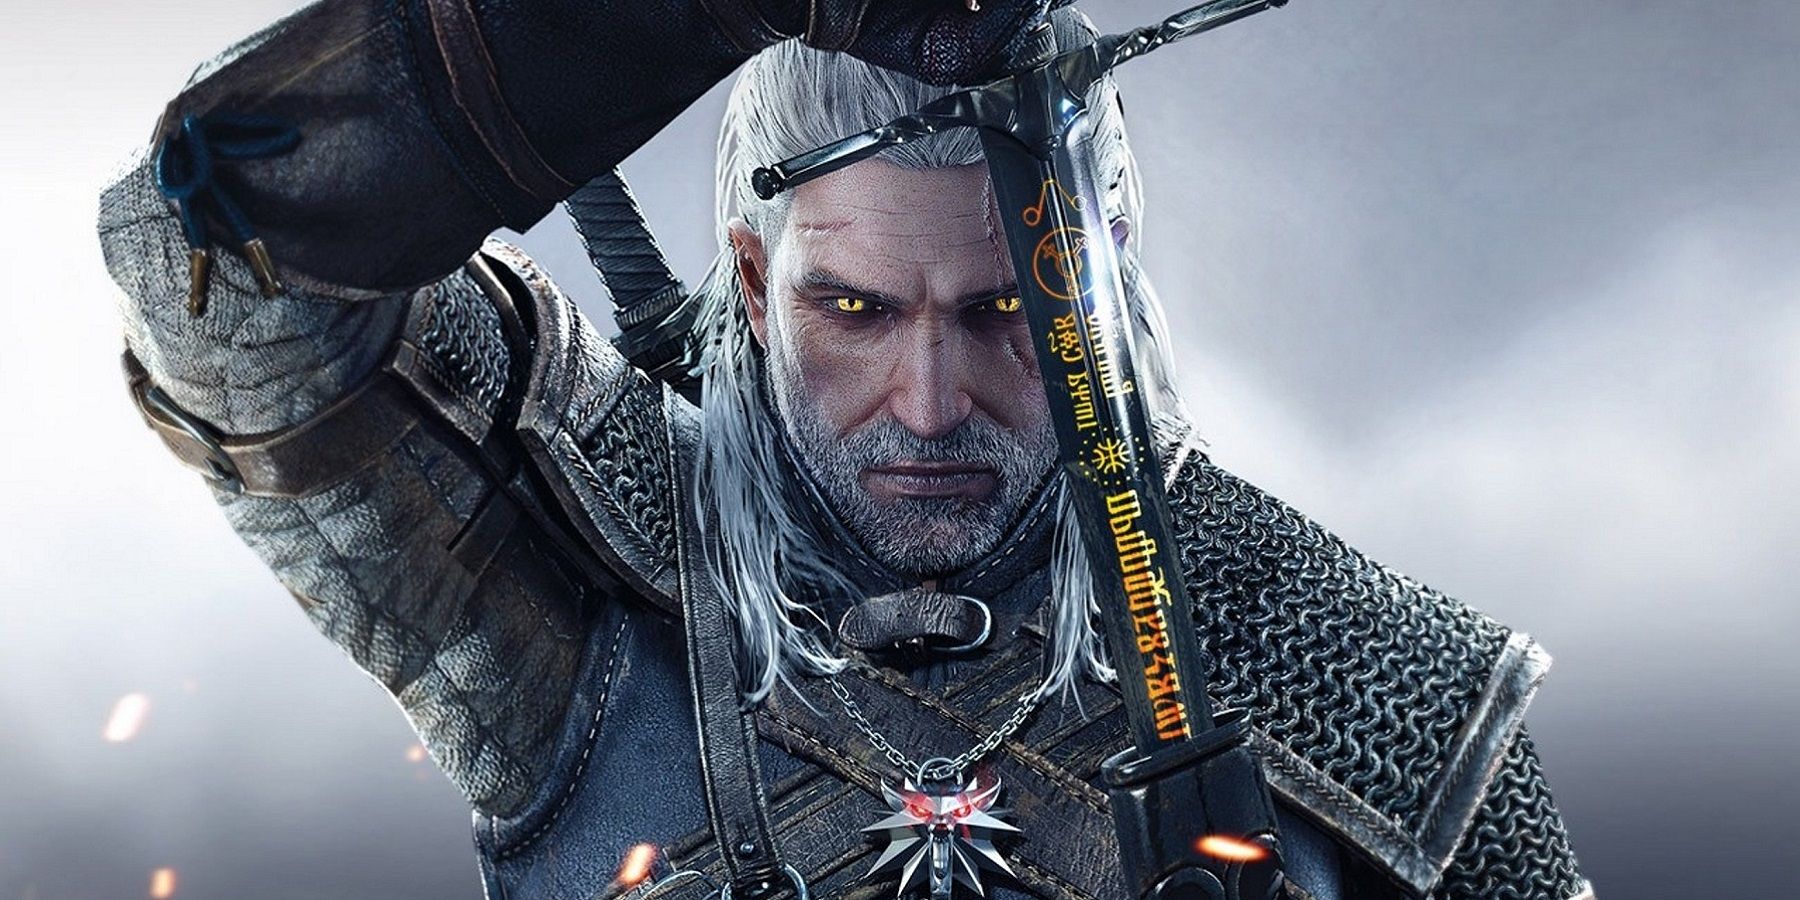 Imagen de The Witcher 3: Wild Hunt que muestra a Geralt de Rivia desenvainando su espada.